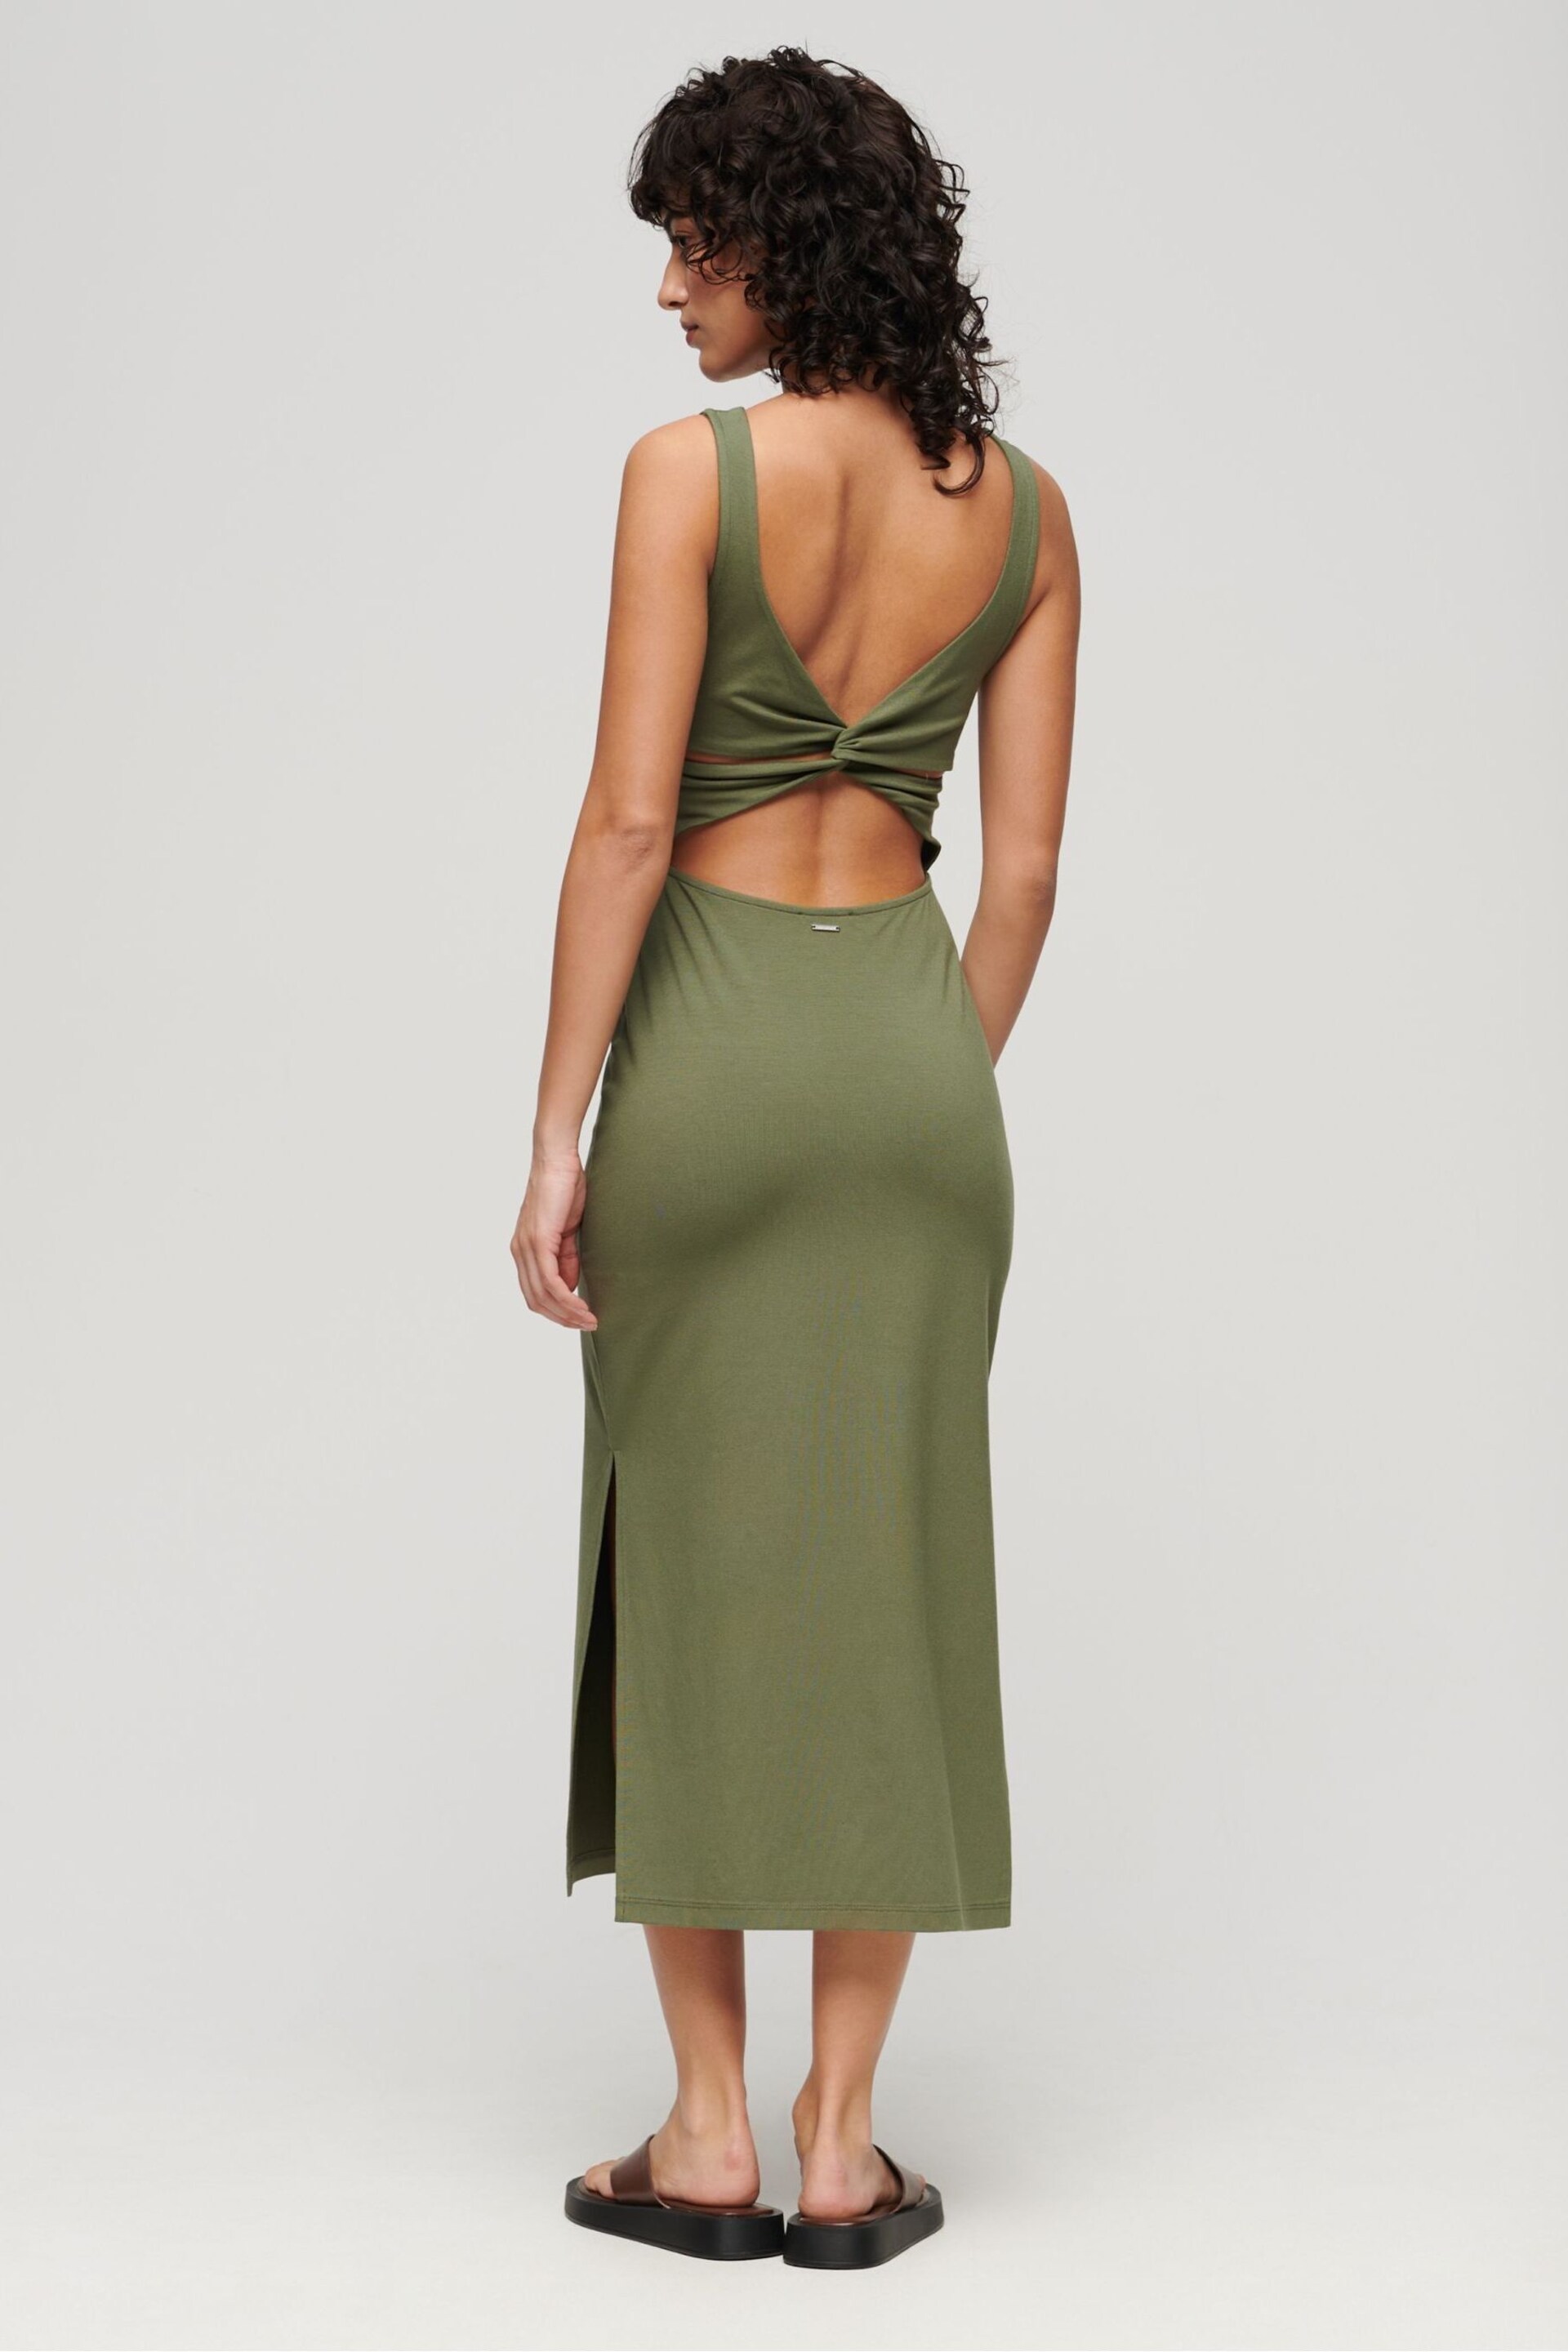 Superdry Green Jersey Twist Back Midi Dress - Image 2 of 5